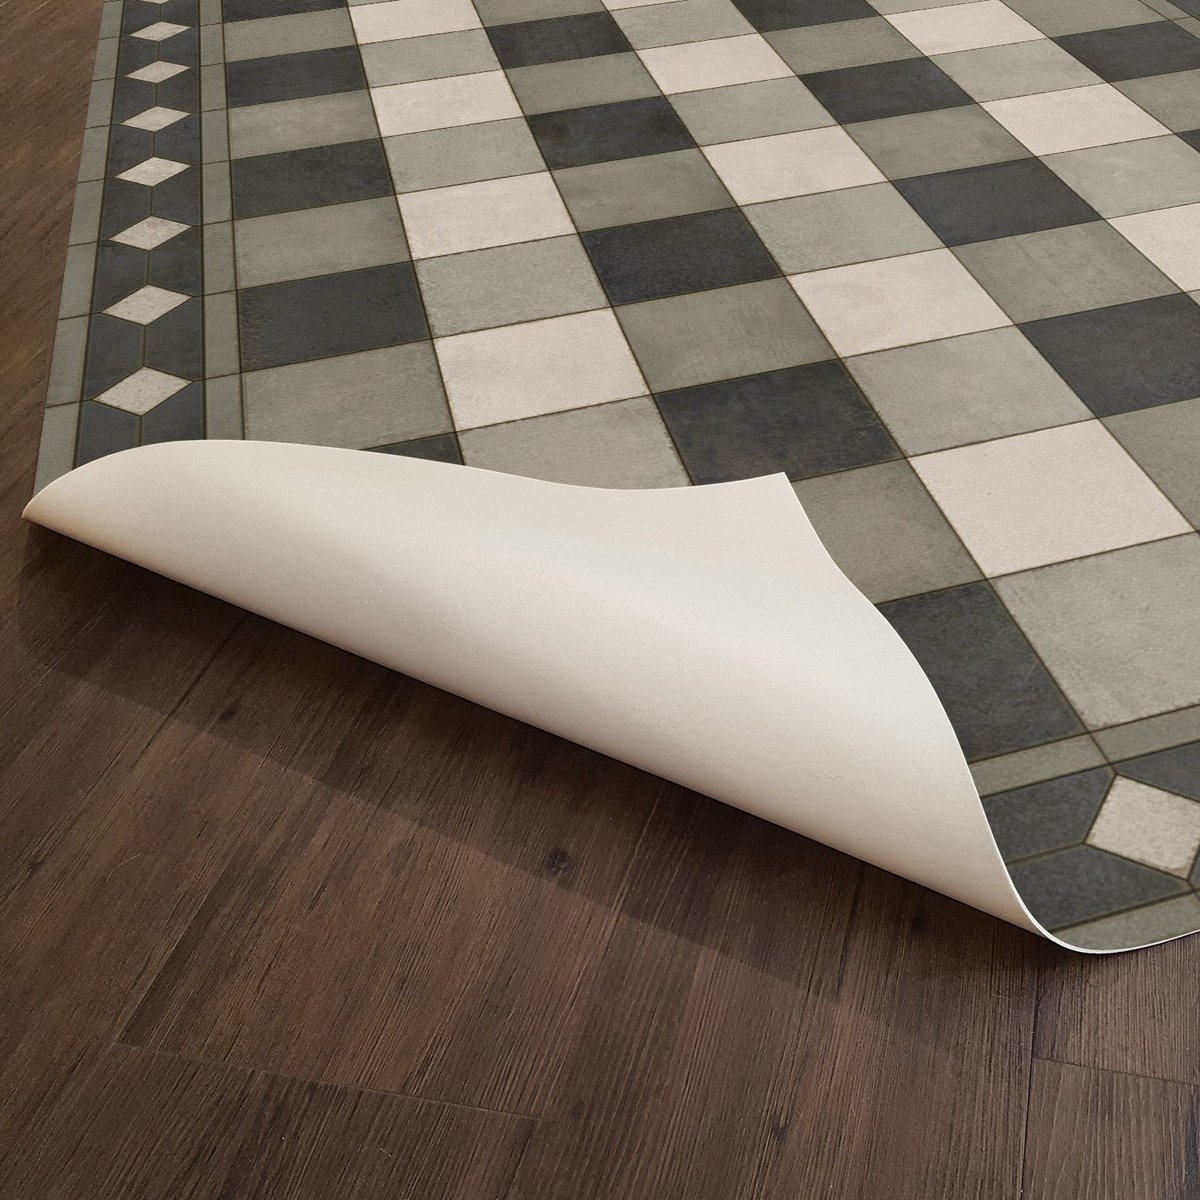 Vintage Tile Vinyl Floor Mat  Kitchen mats floor, Vinyl floor mat, Vinyl  flooring